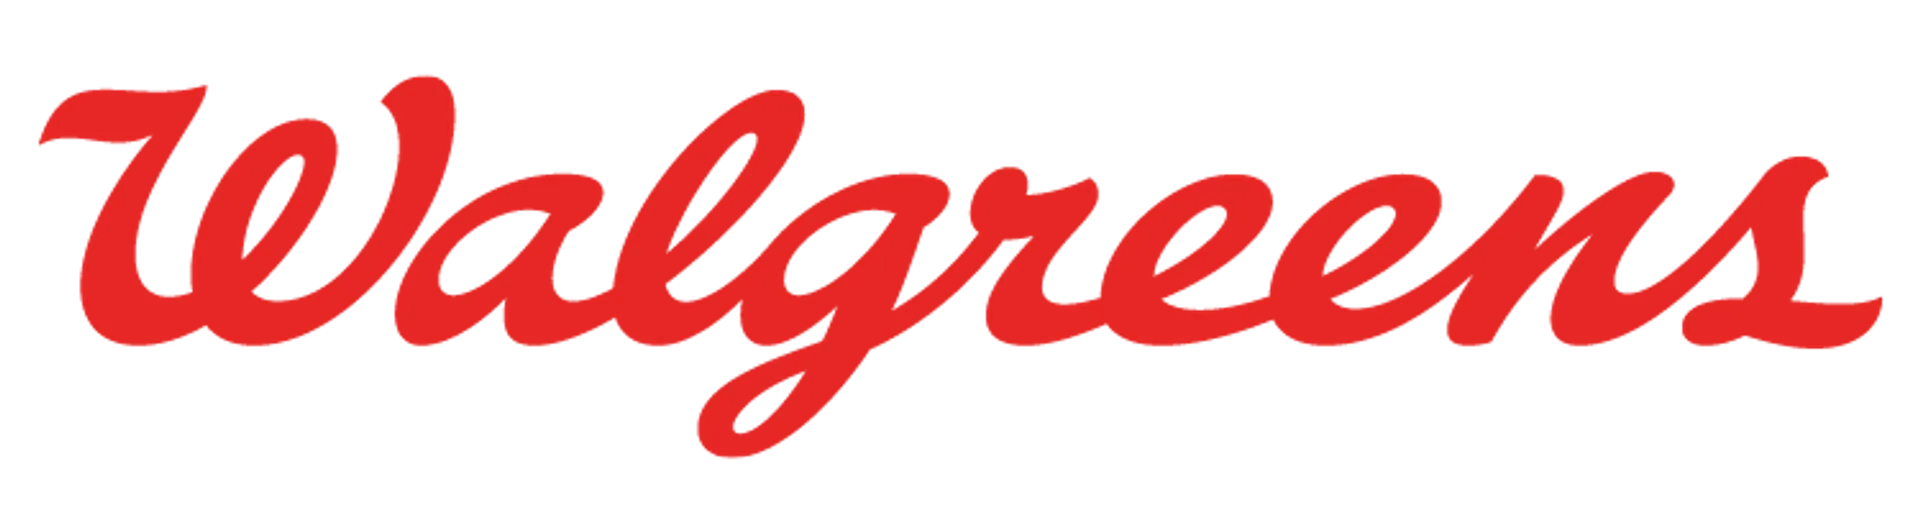 WALGREENS logo